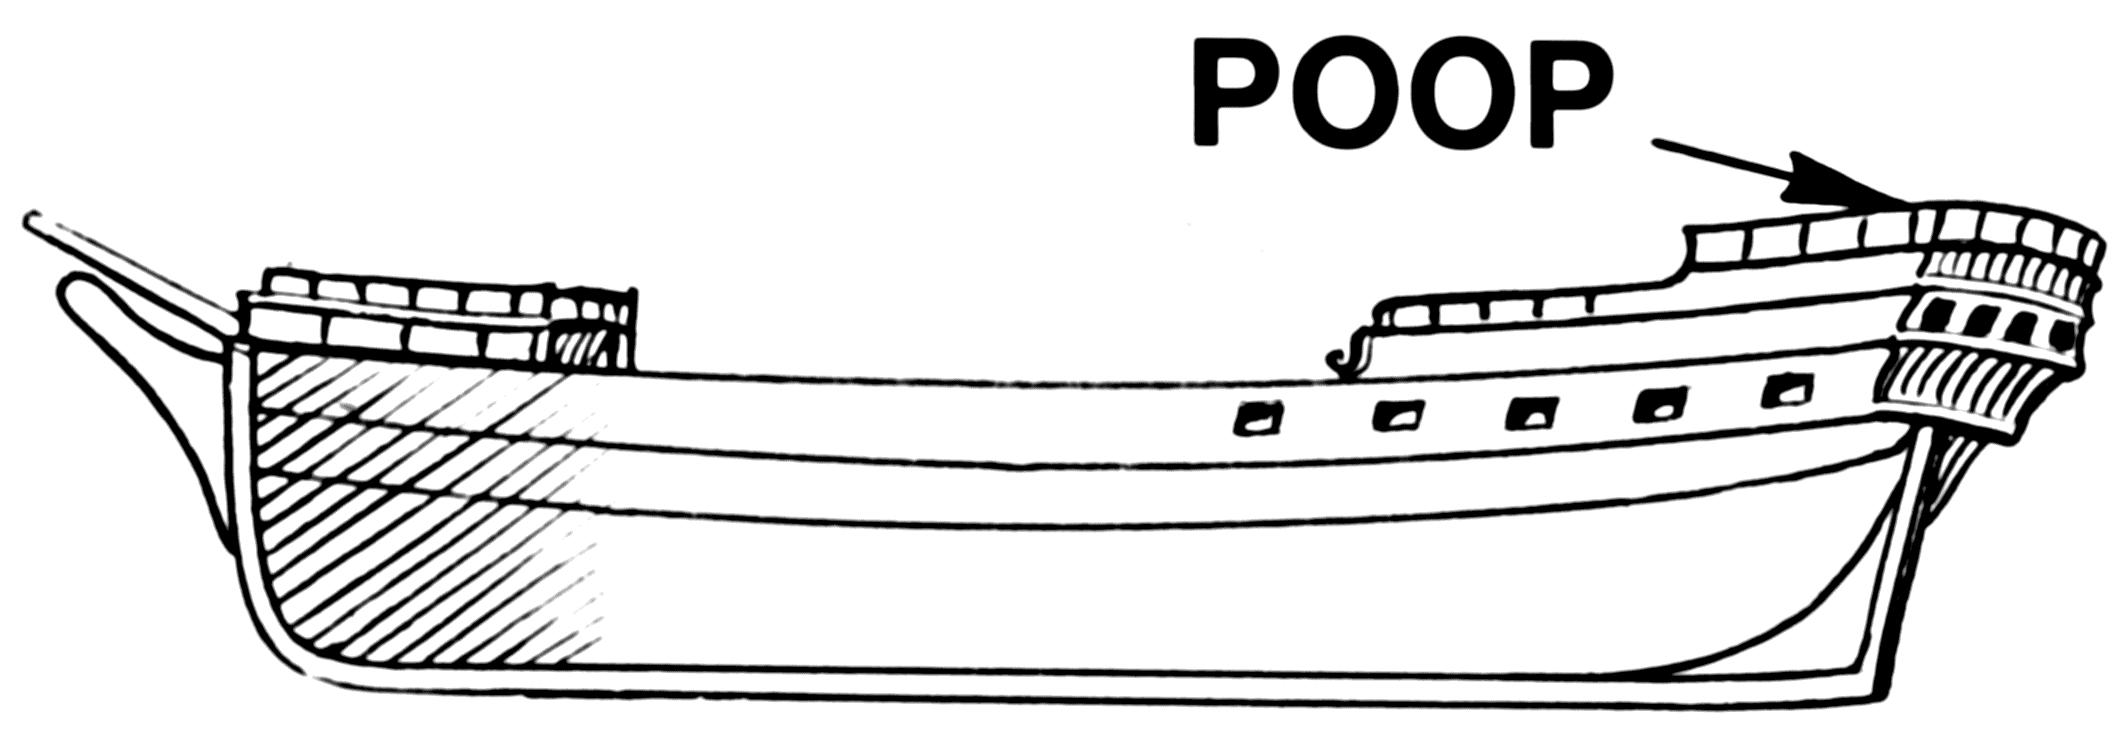 poop deck ship